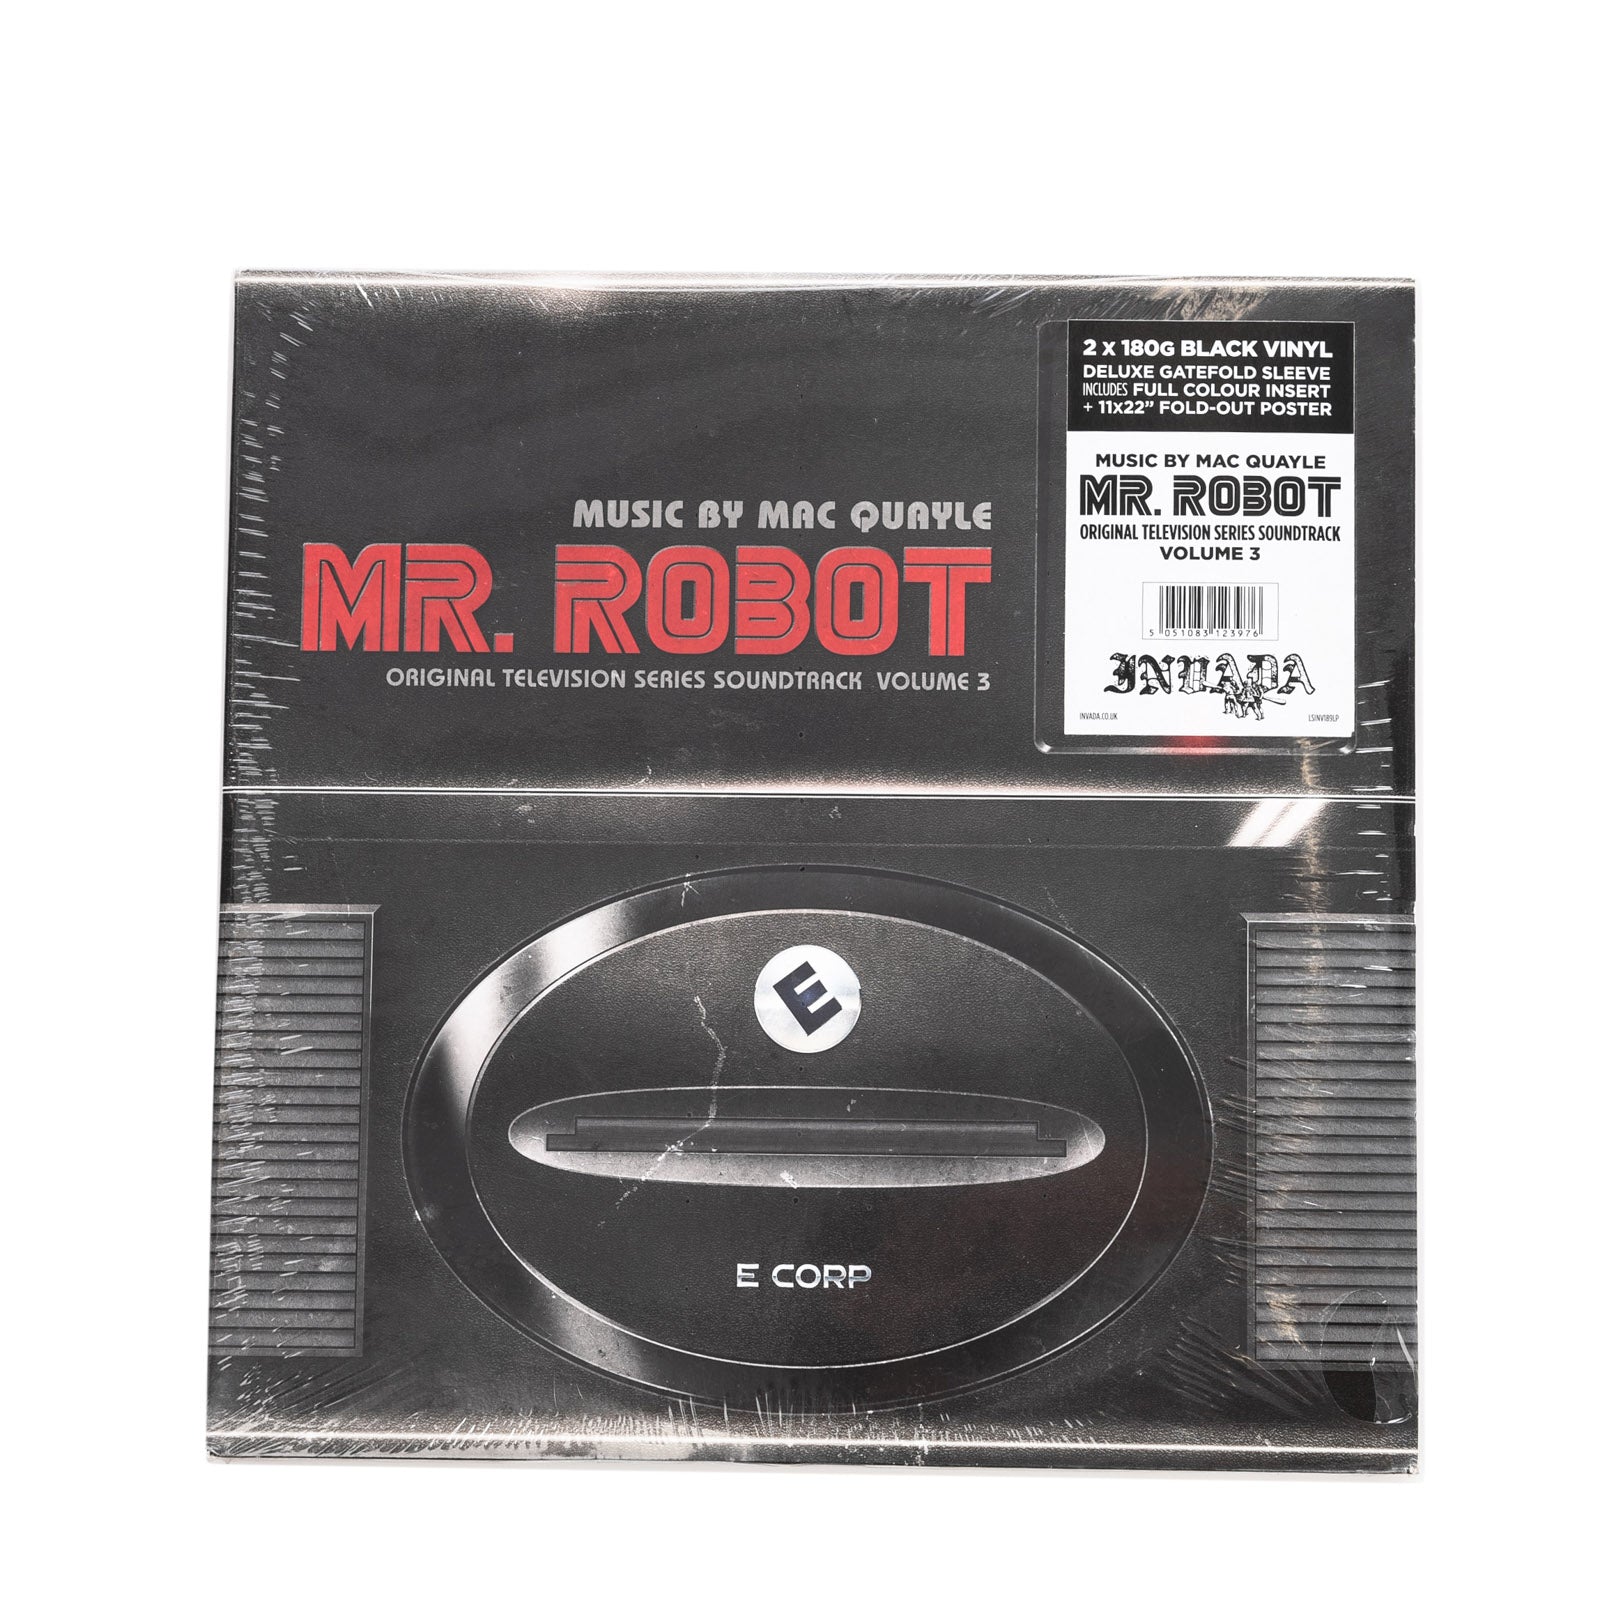 Mr. Robot Volume 3 - Mac Quayle -2xLP Vinyl Album Deluxe Gatefold Sleeve gallery main photo